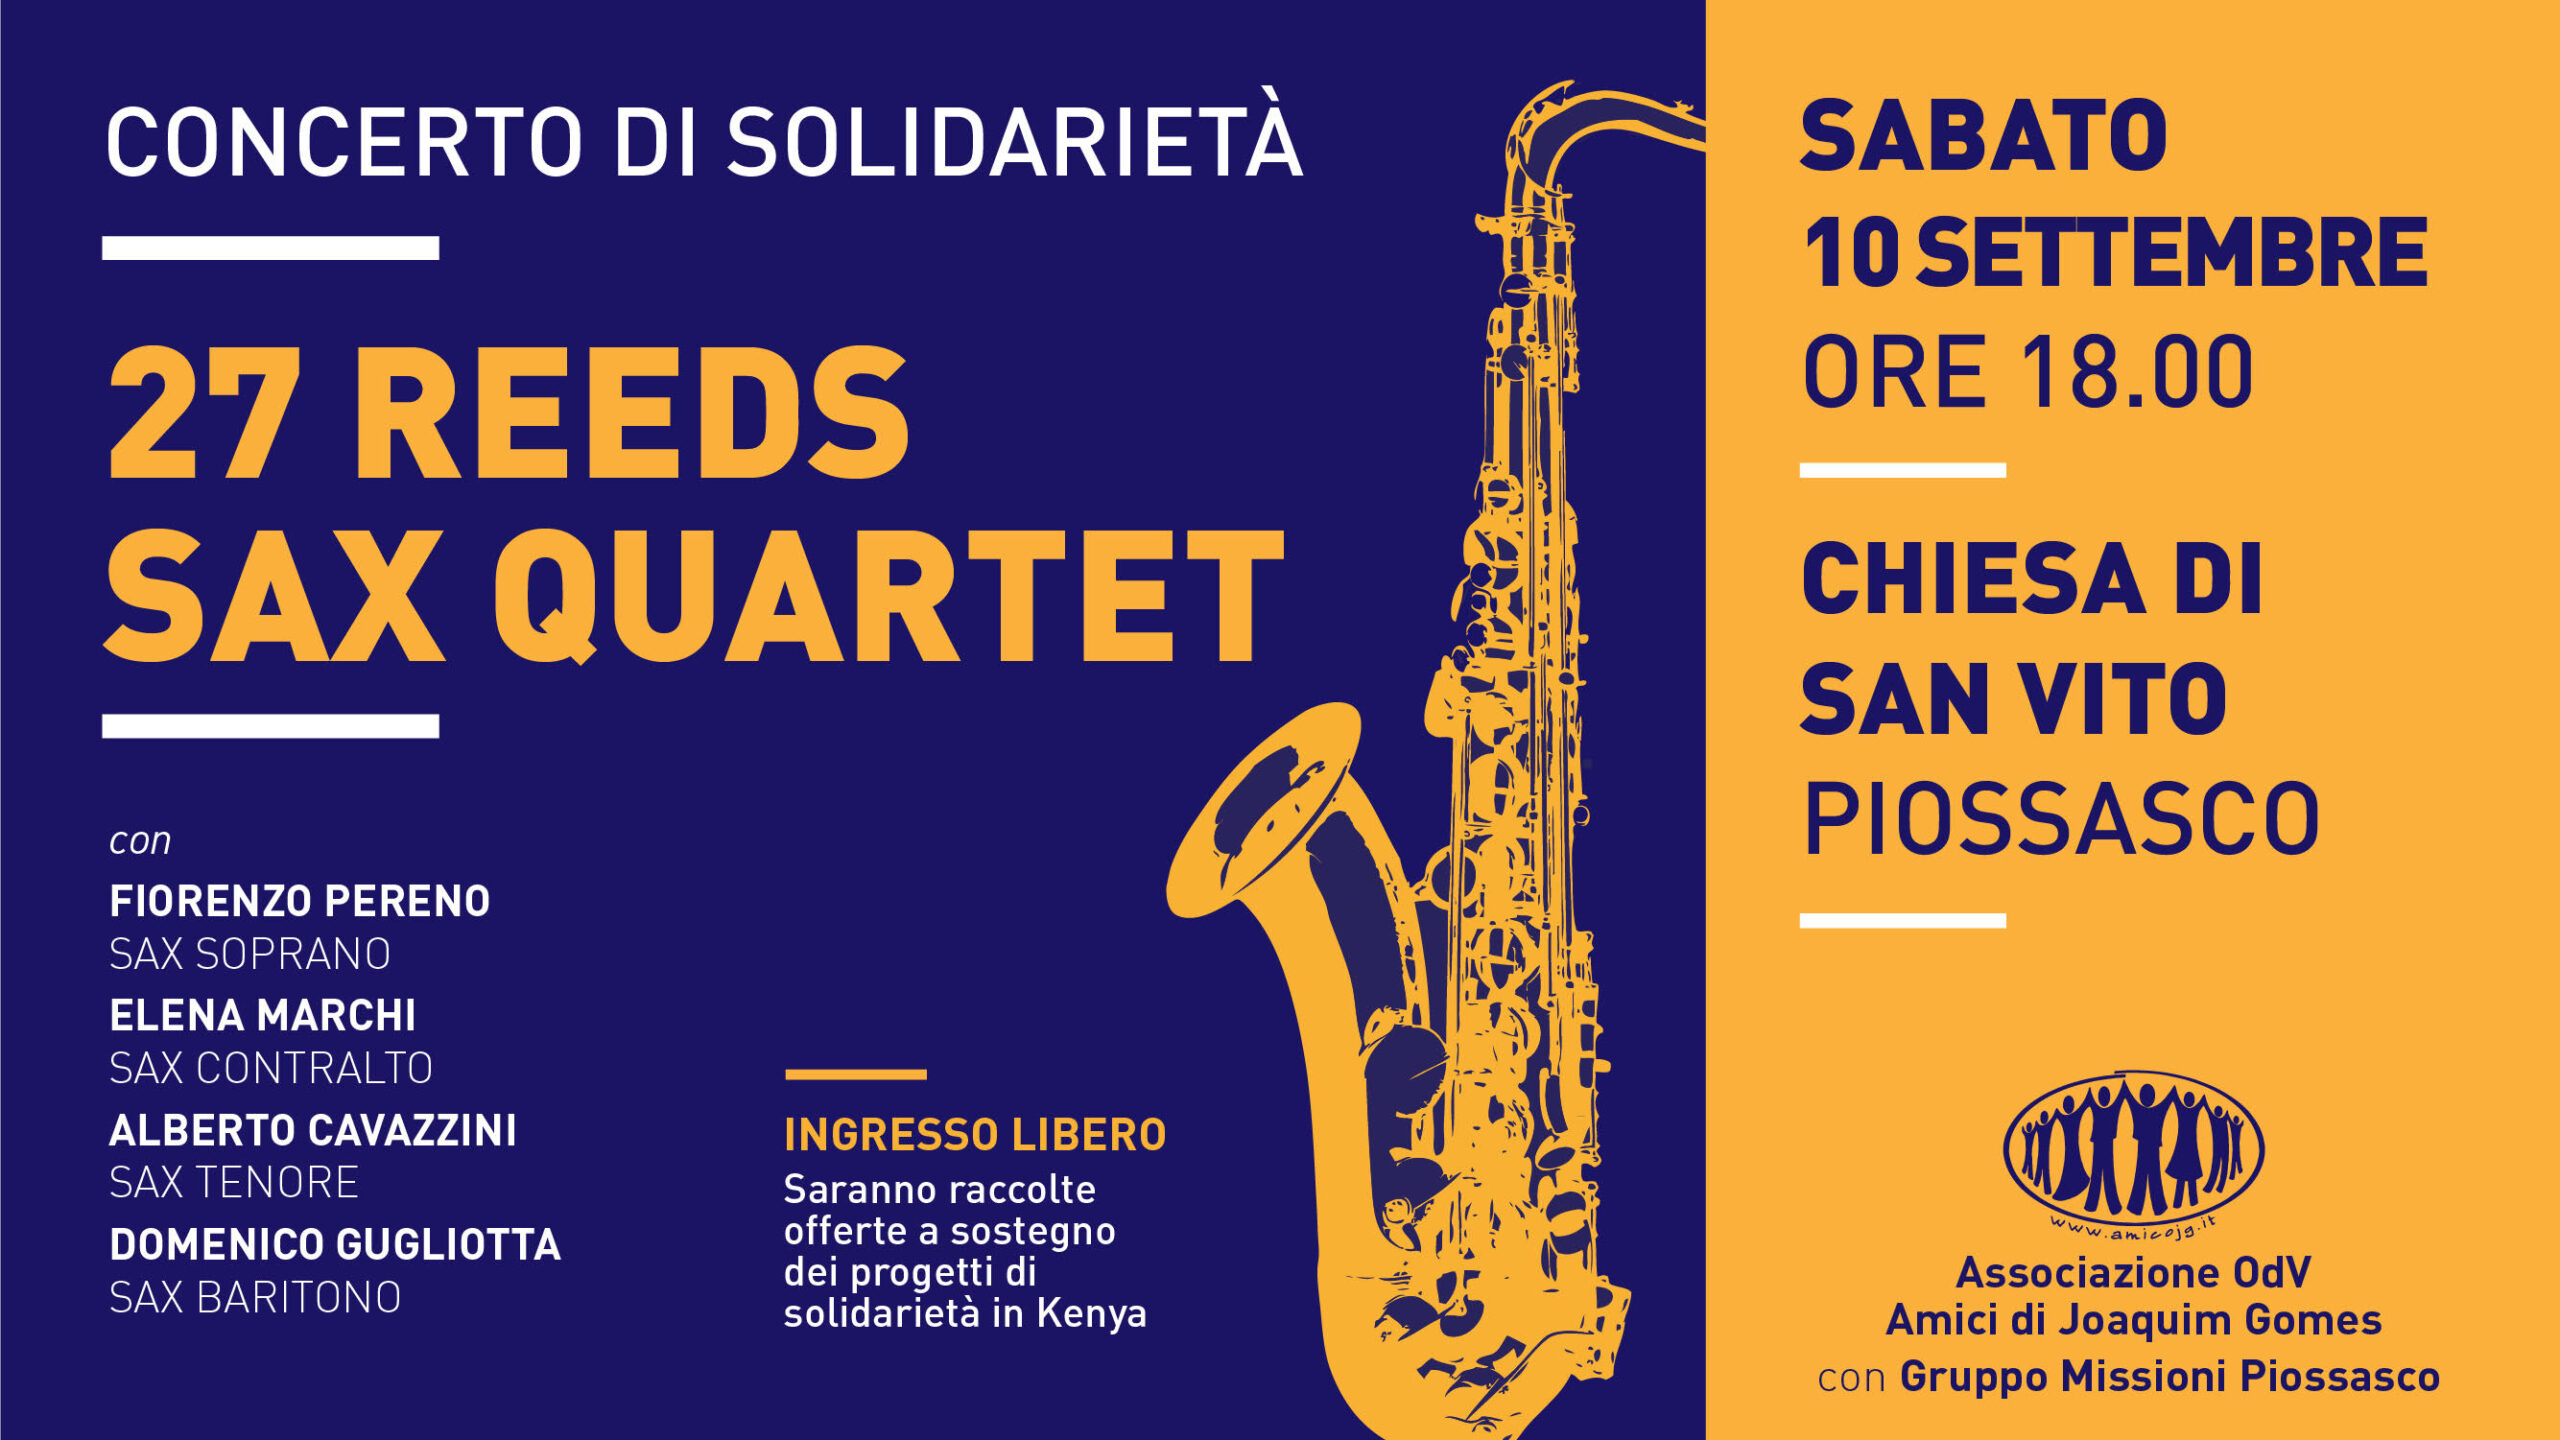 Concerto di solidarietà del quartetto “27 Reeds Sax Quartet” il 10/09/2022